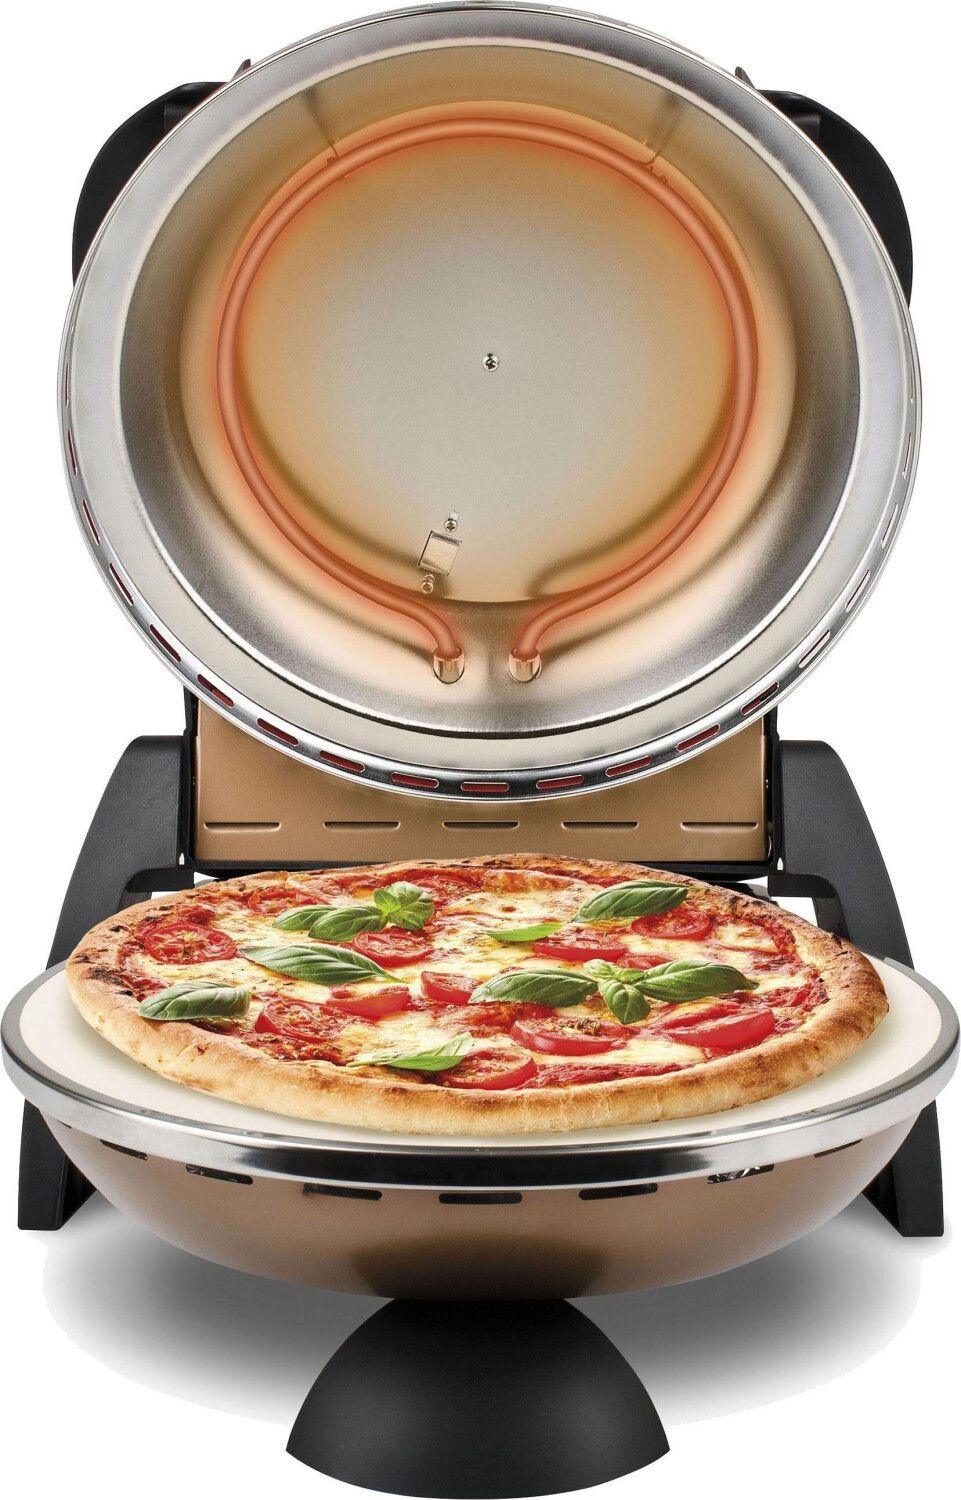 G3Ferrari G10006 Delizia Pizzamaker in Kupfer für 81,89€ (statt 100€)